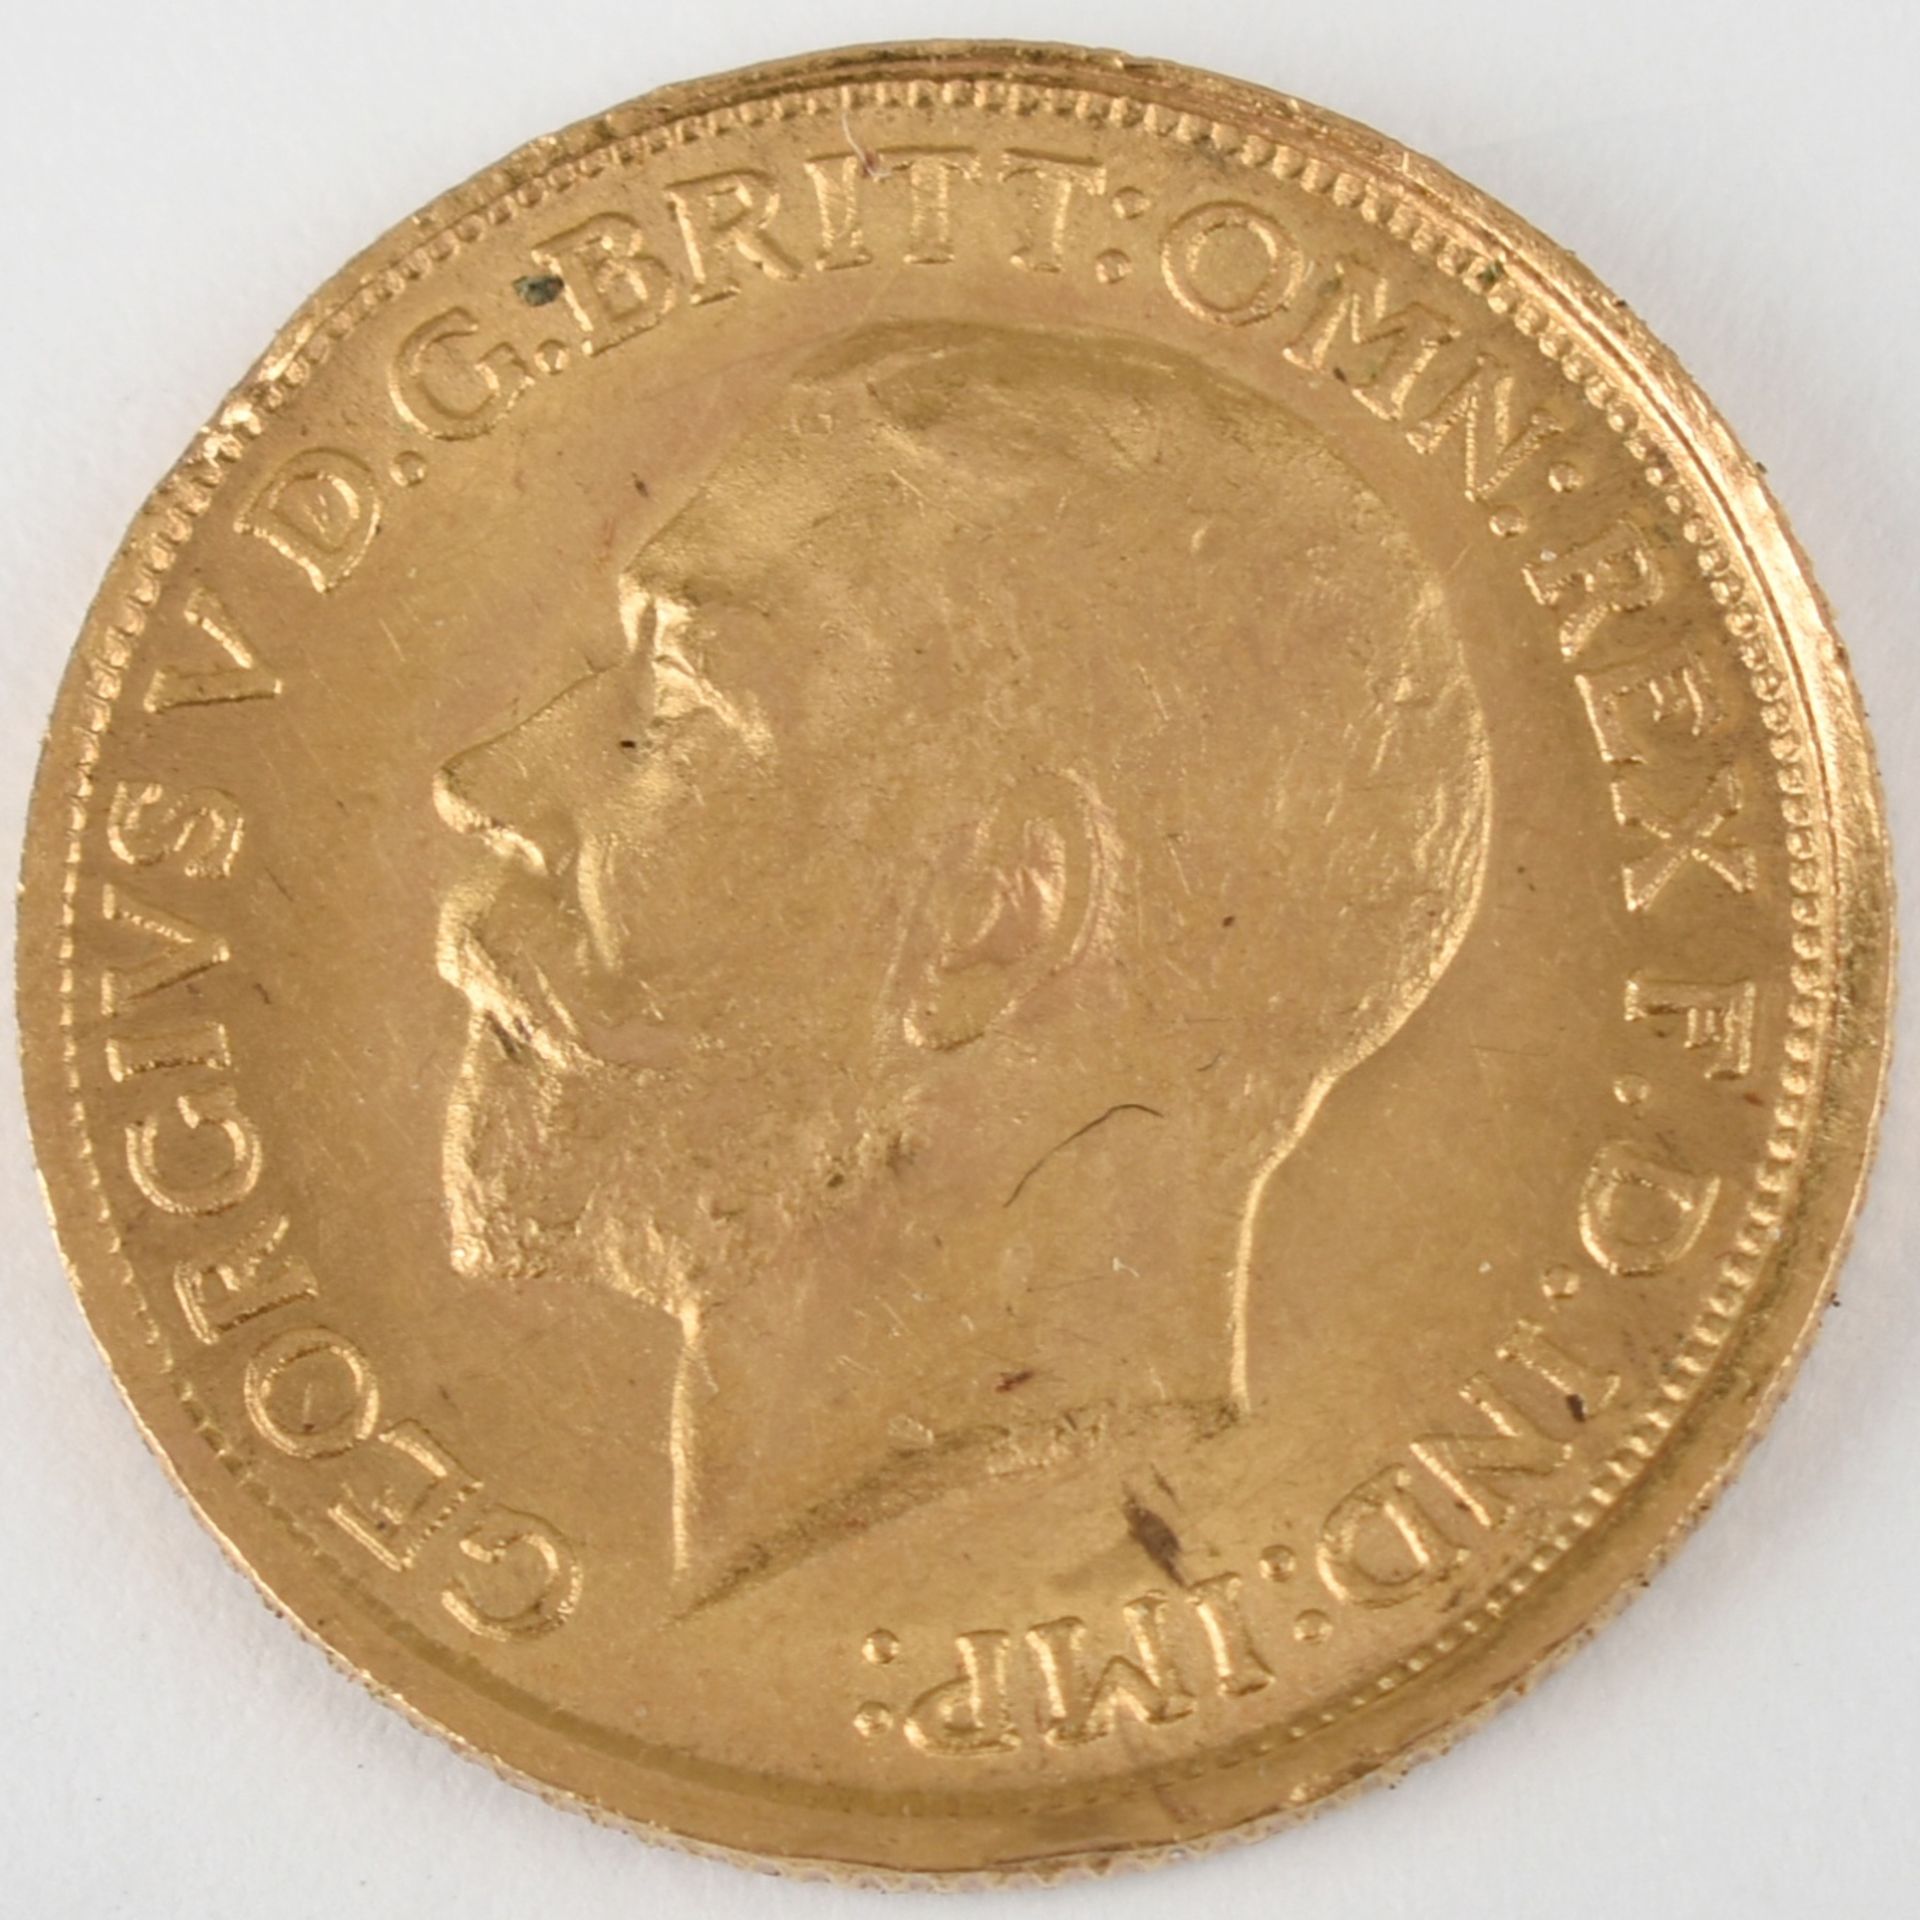 Goldmünze Großbritannien 1911 Sovereign in Gold, 916/1000, 7,988 g, D ca. 22 mm, av. König George V. - Bild 2 aus 3